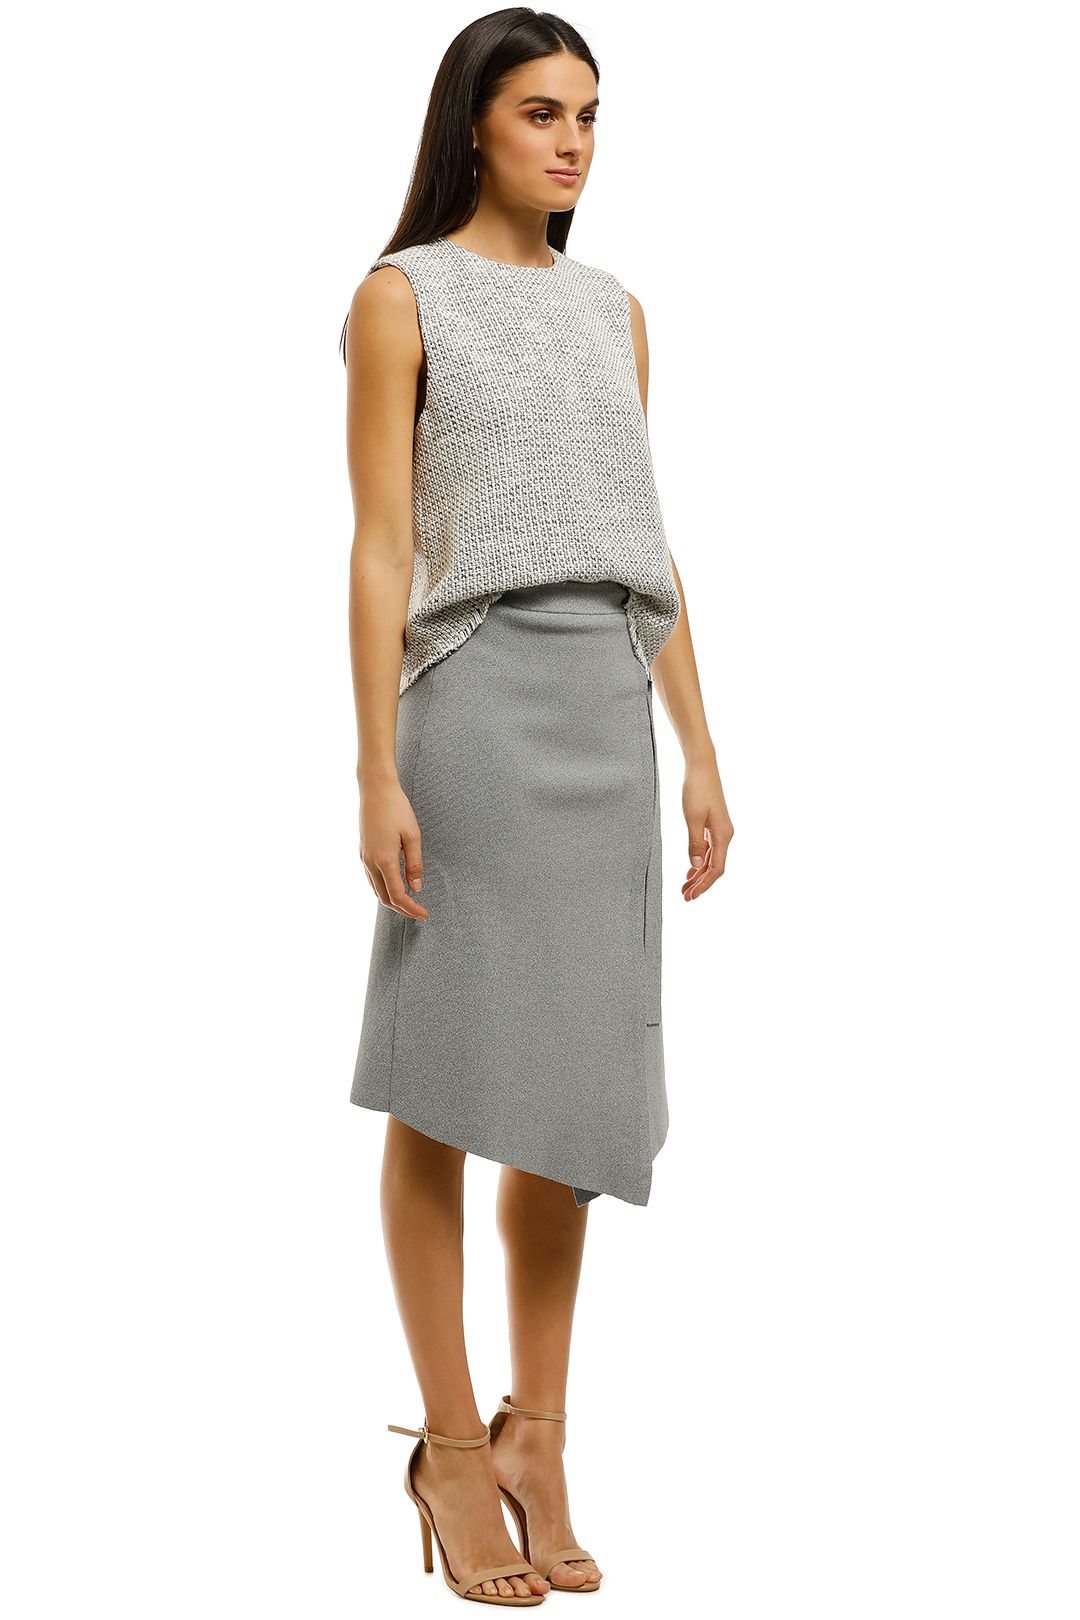 FWRD-The-Label-Alena-Crepe-Knit-Skirt-Grey-Side